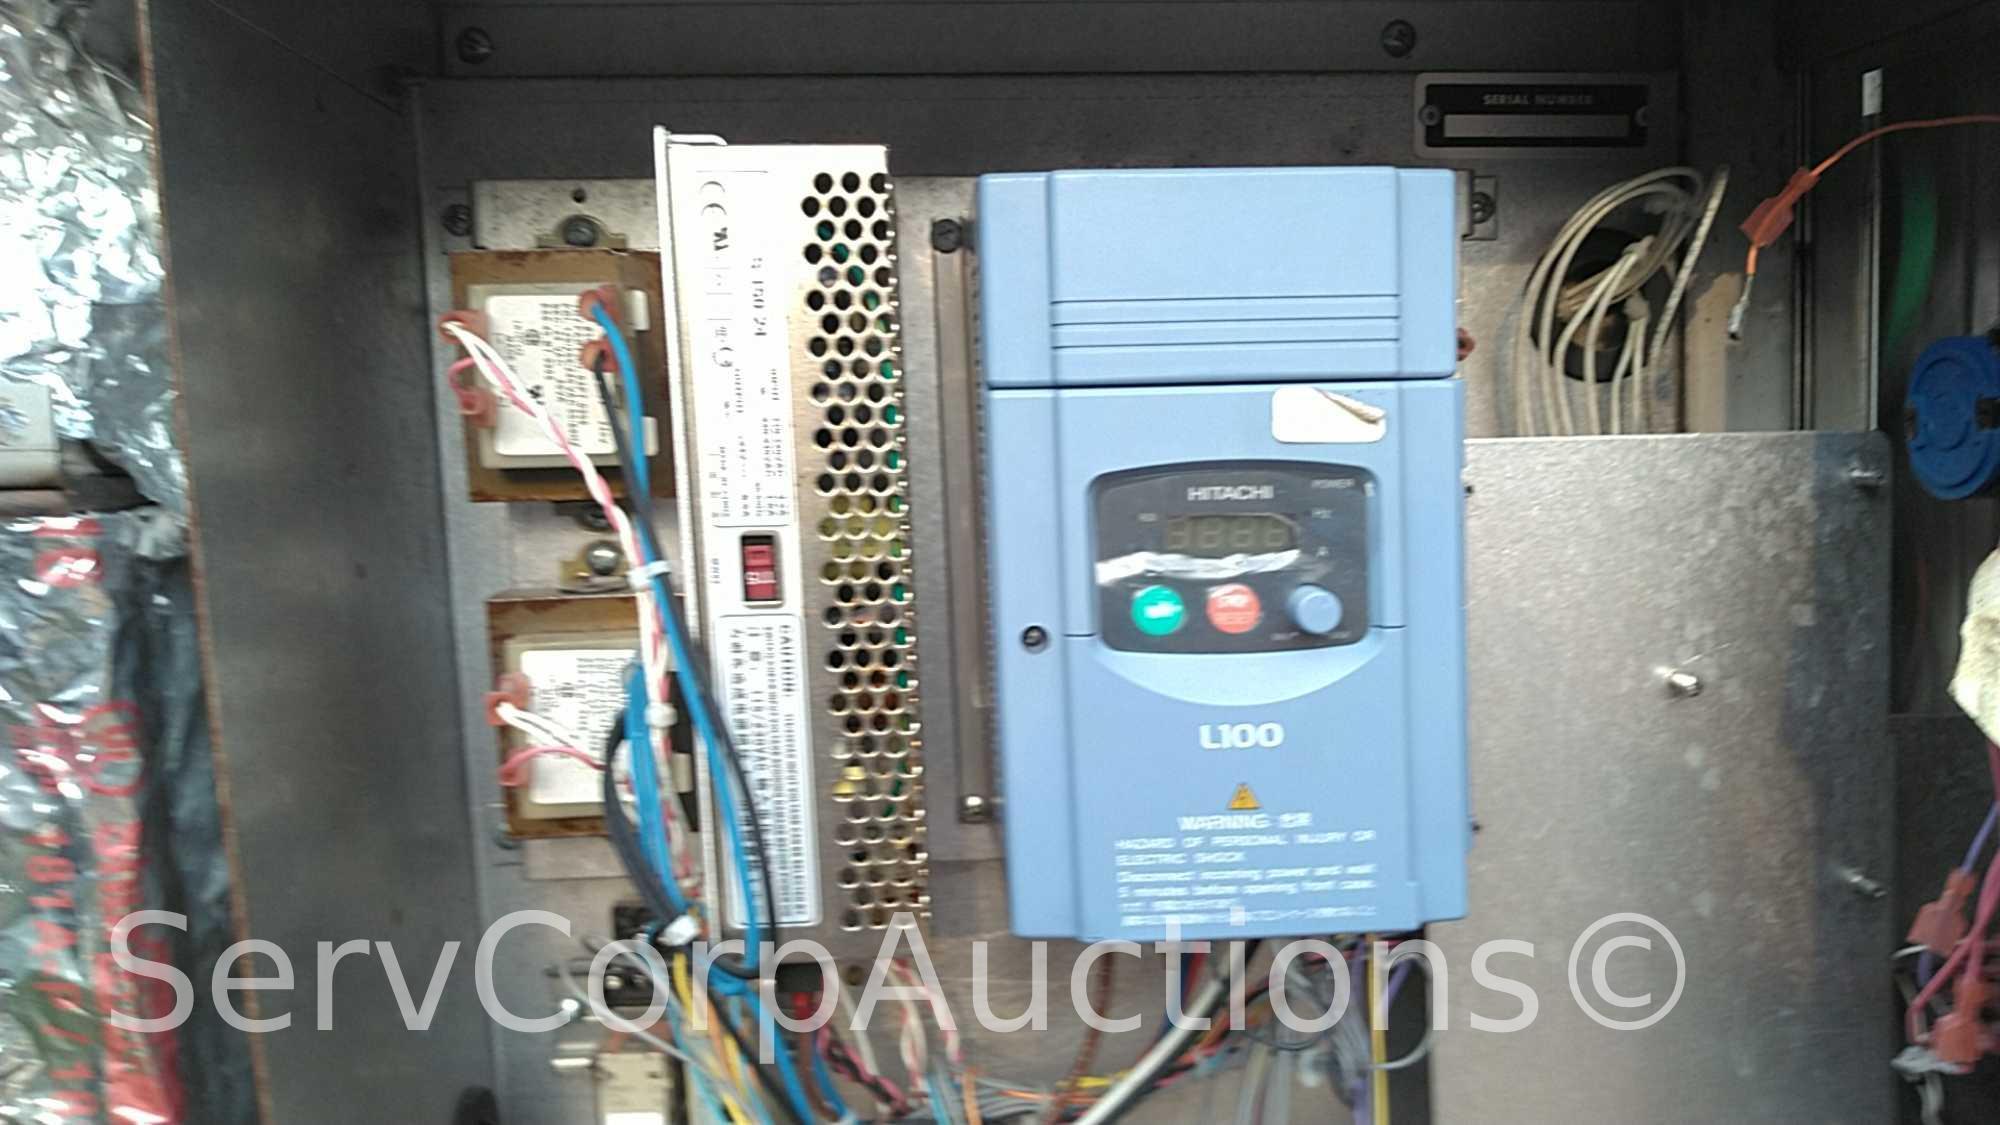 Blodgett BCX14 Electrical Combo Oven/Steamer